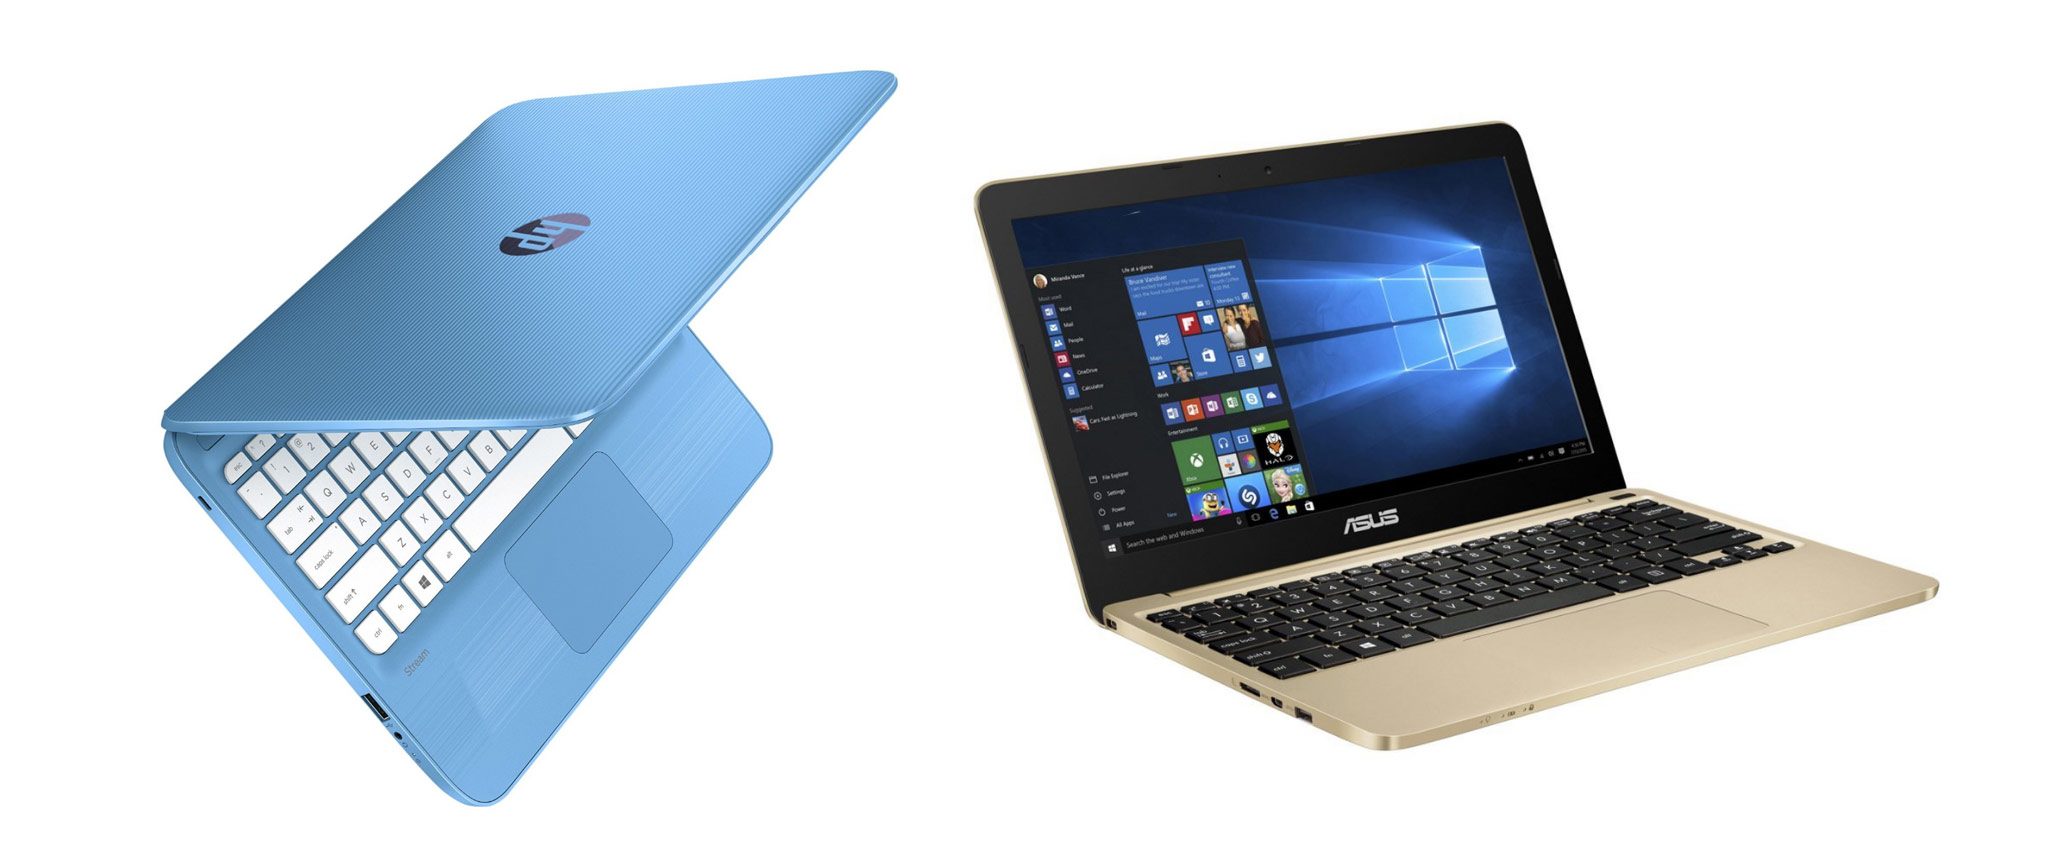 Notebook 10.1 Pouces Windows 10 Mini Pc Portable 1 Go Ram Intel